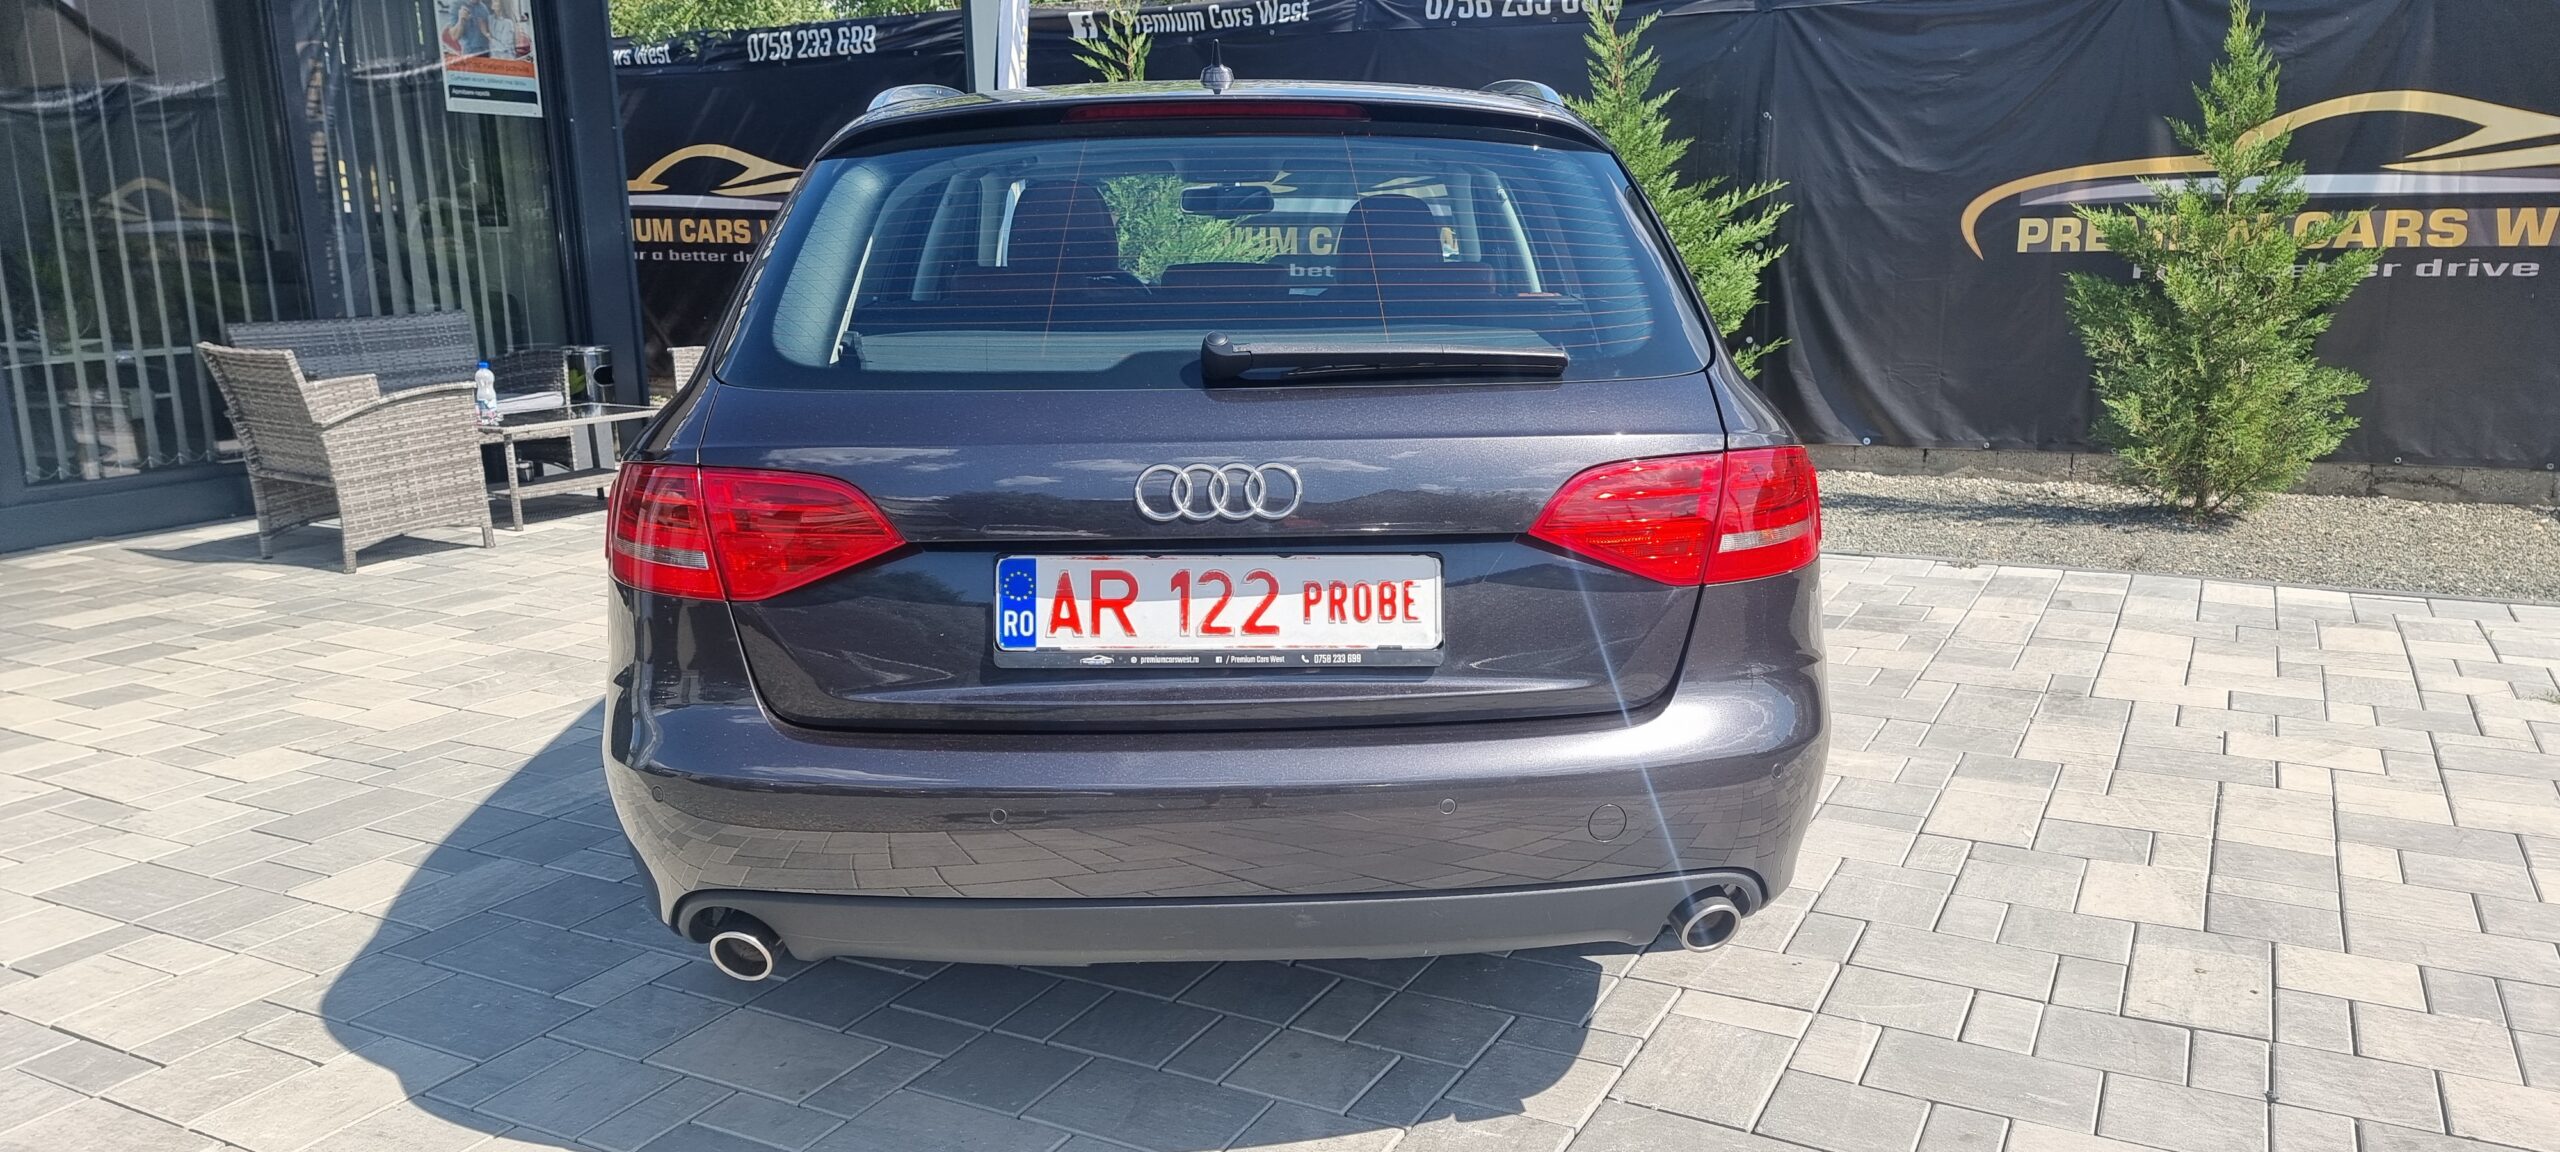 Audi A4 2.7 TDI Euro 5